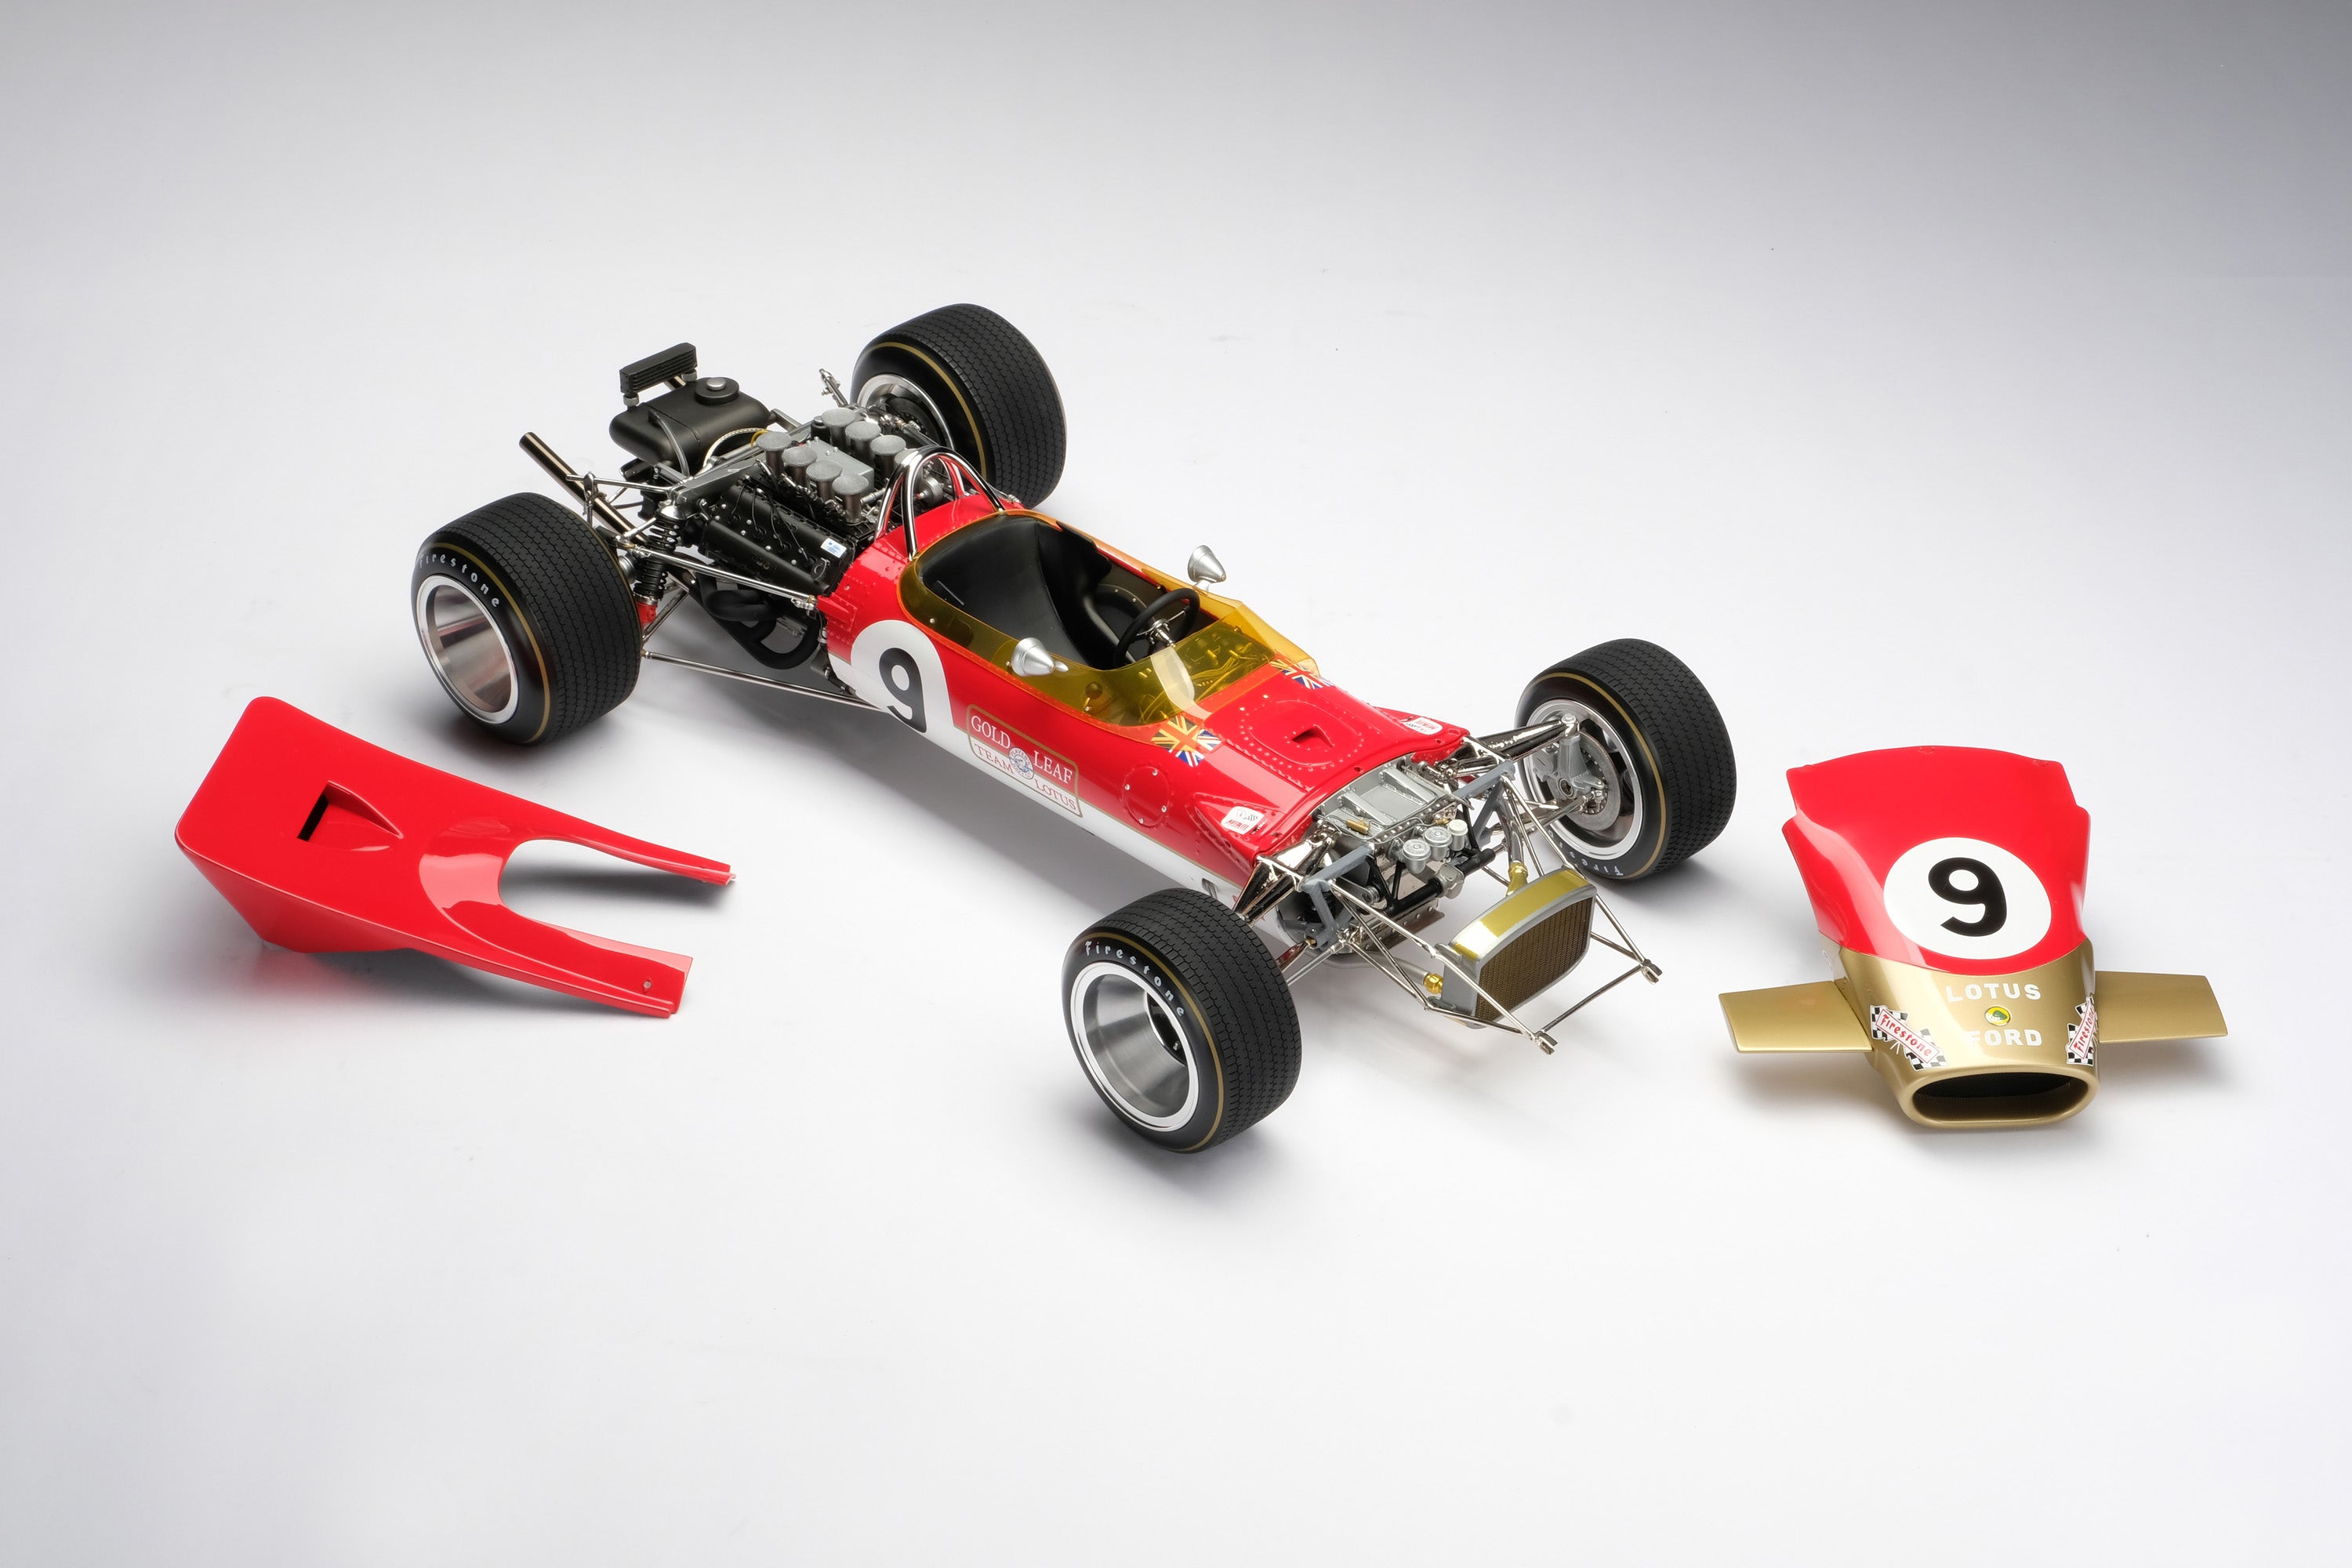 Lotus 49B - 1968 Monaco GP Winner - Hill – Amalgam Collection